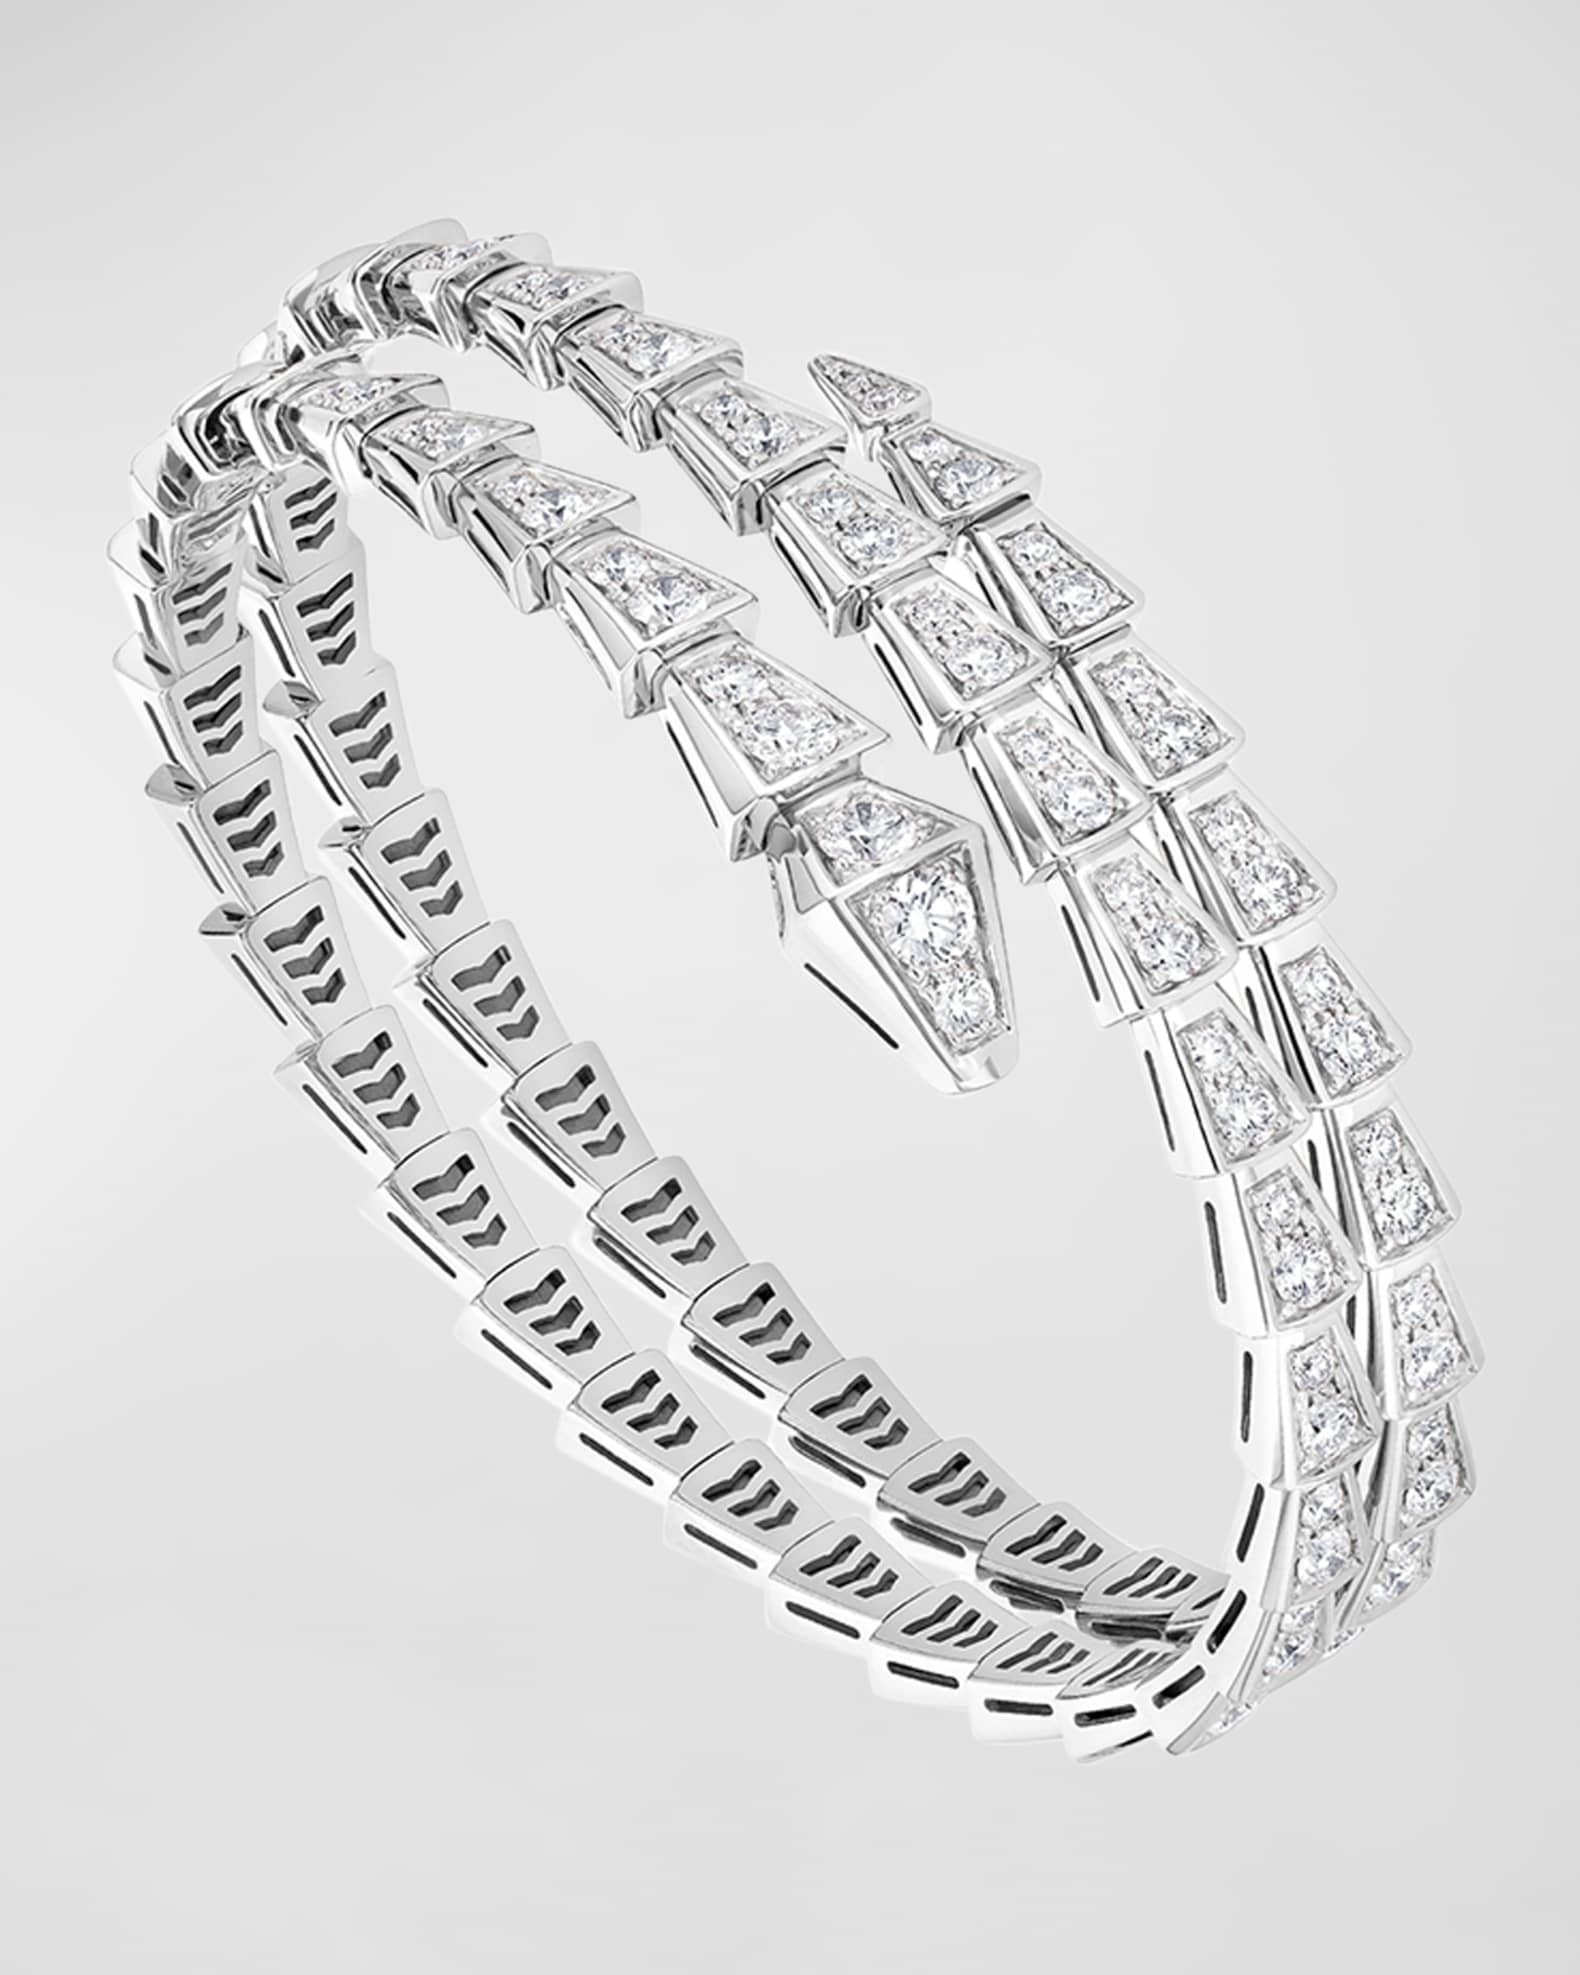 Rose gold Serpenti Viper Bracelet with 5.02 ct Diamonds